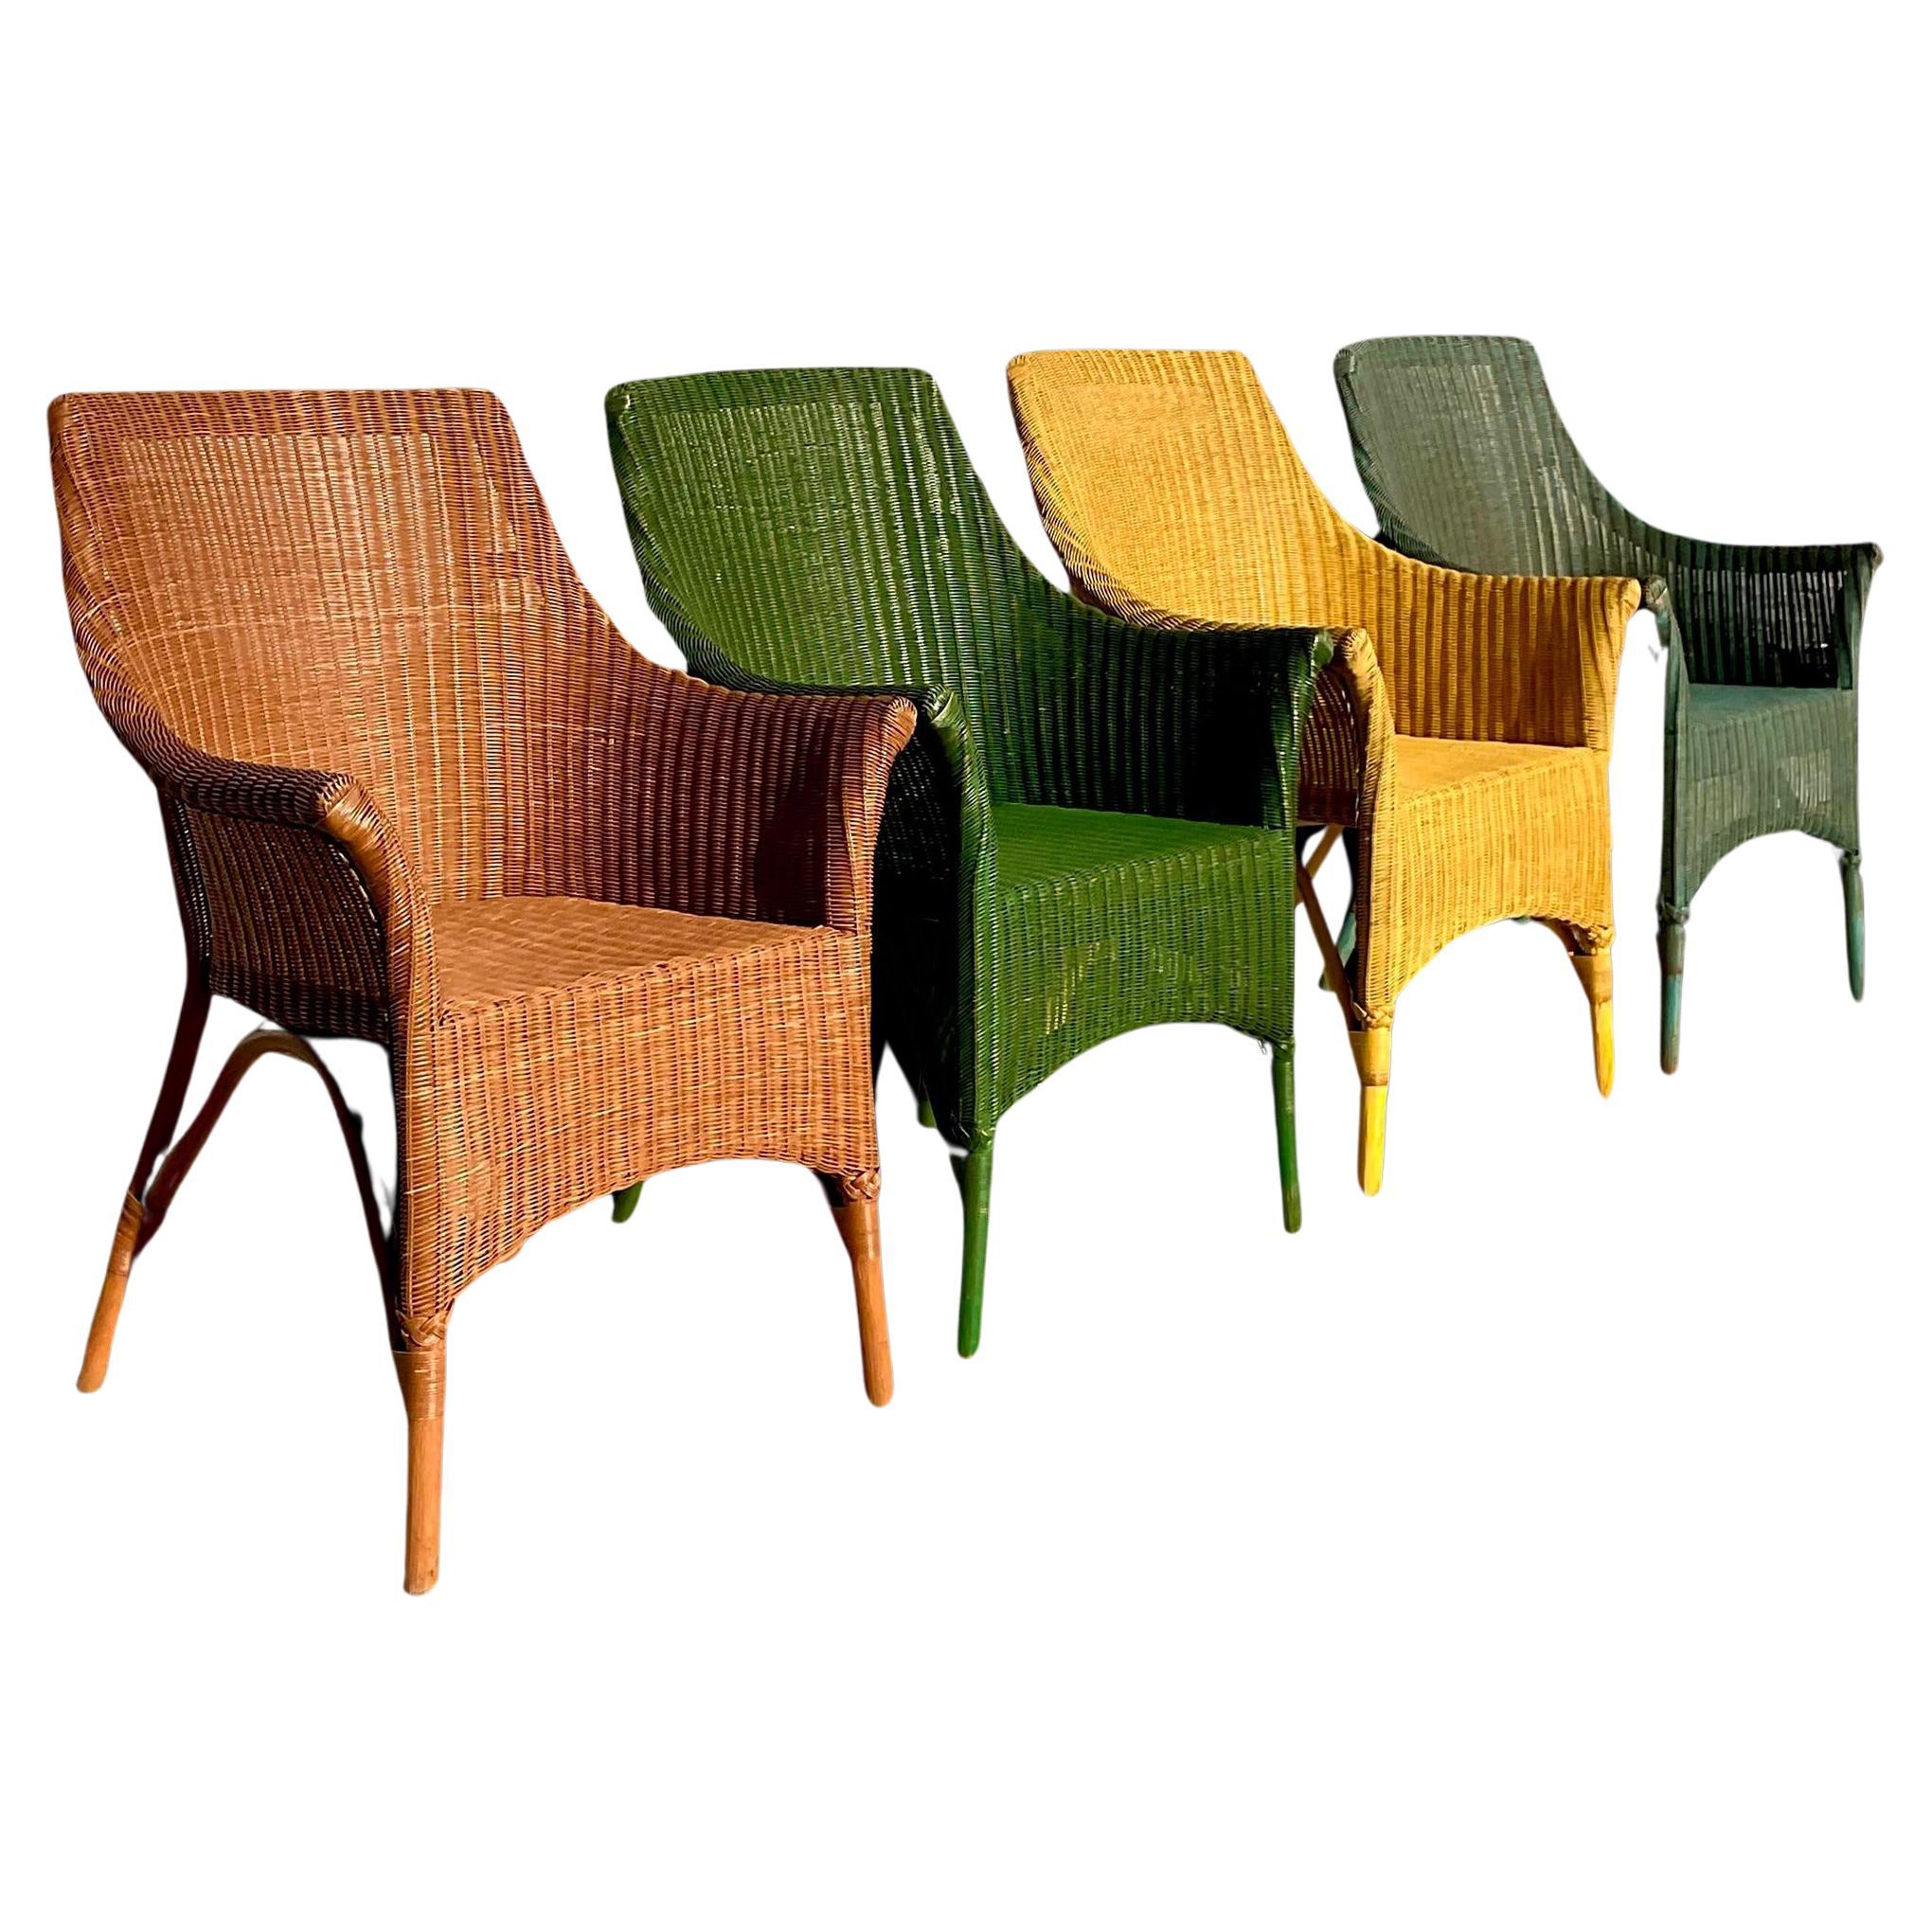 Palecek Furniture Dining Room Chairs